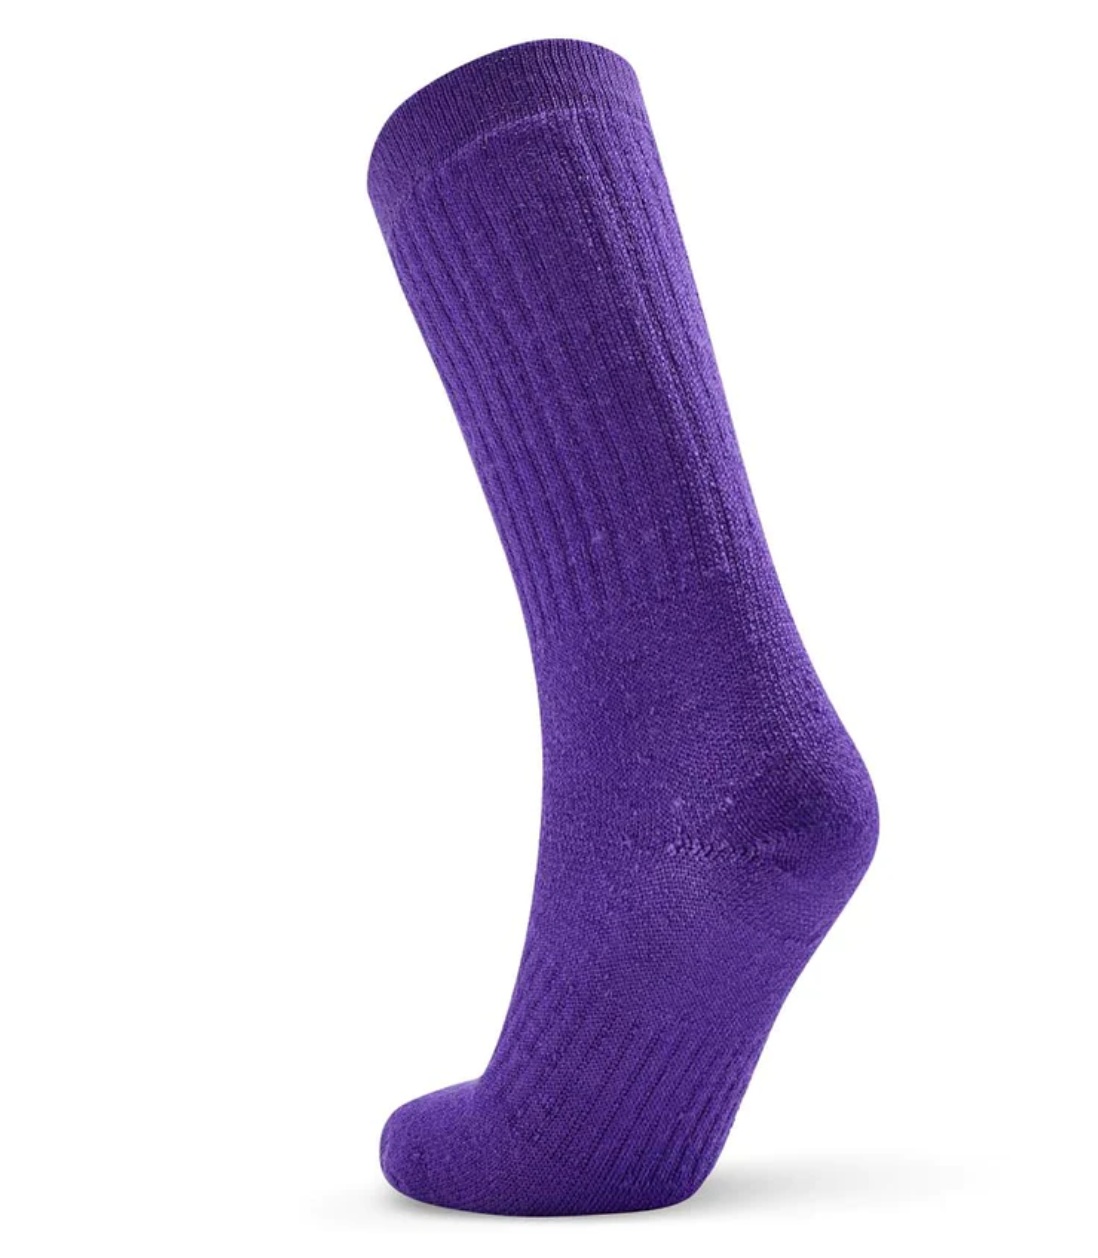 Southern Merino Wool Boot Socks in Purple